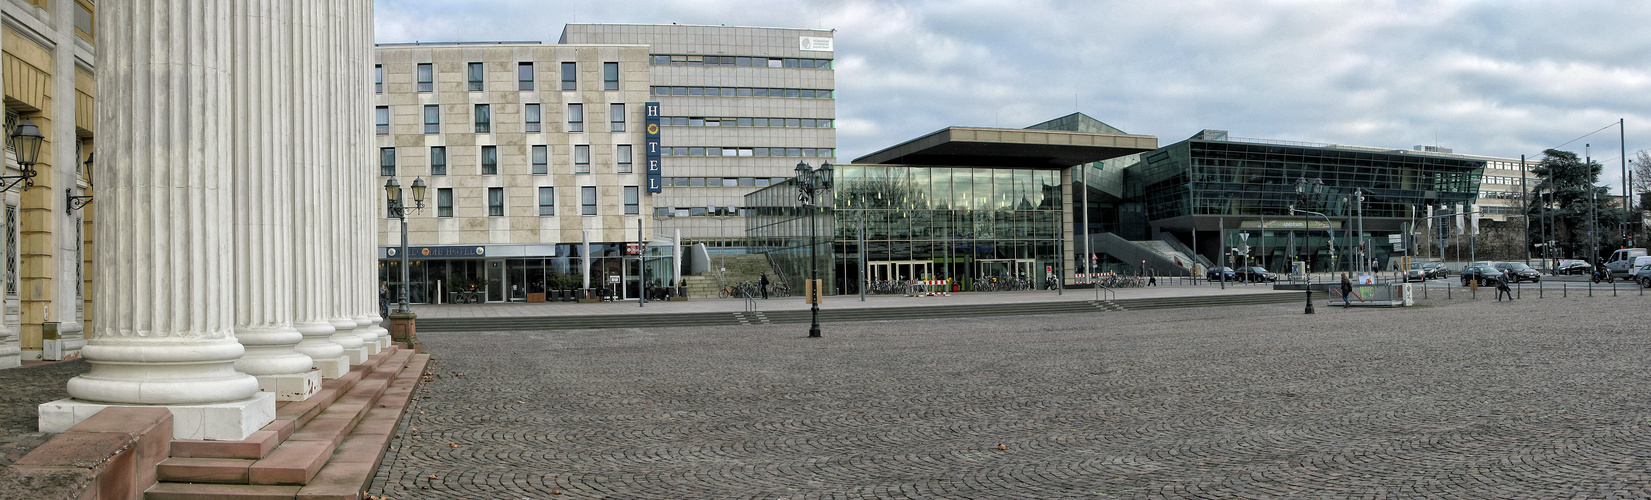 Darmstadt Karolinenplatz